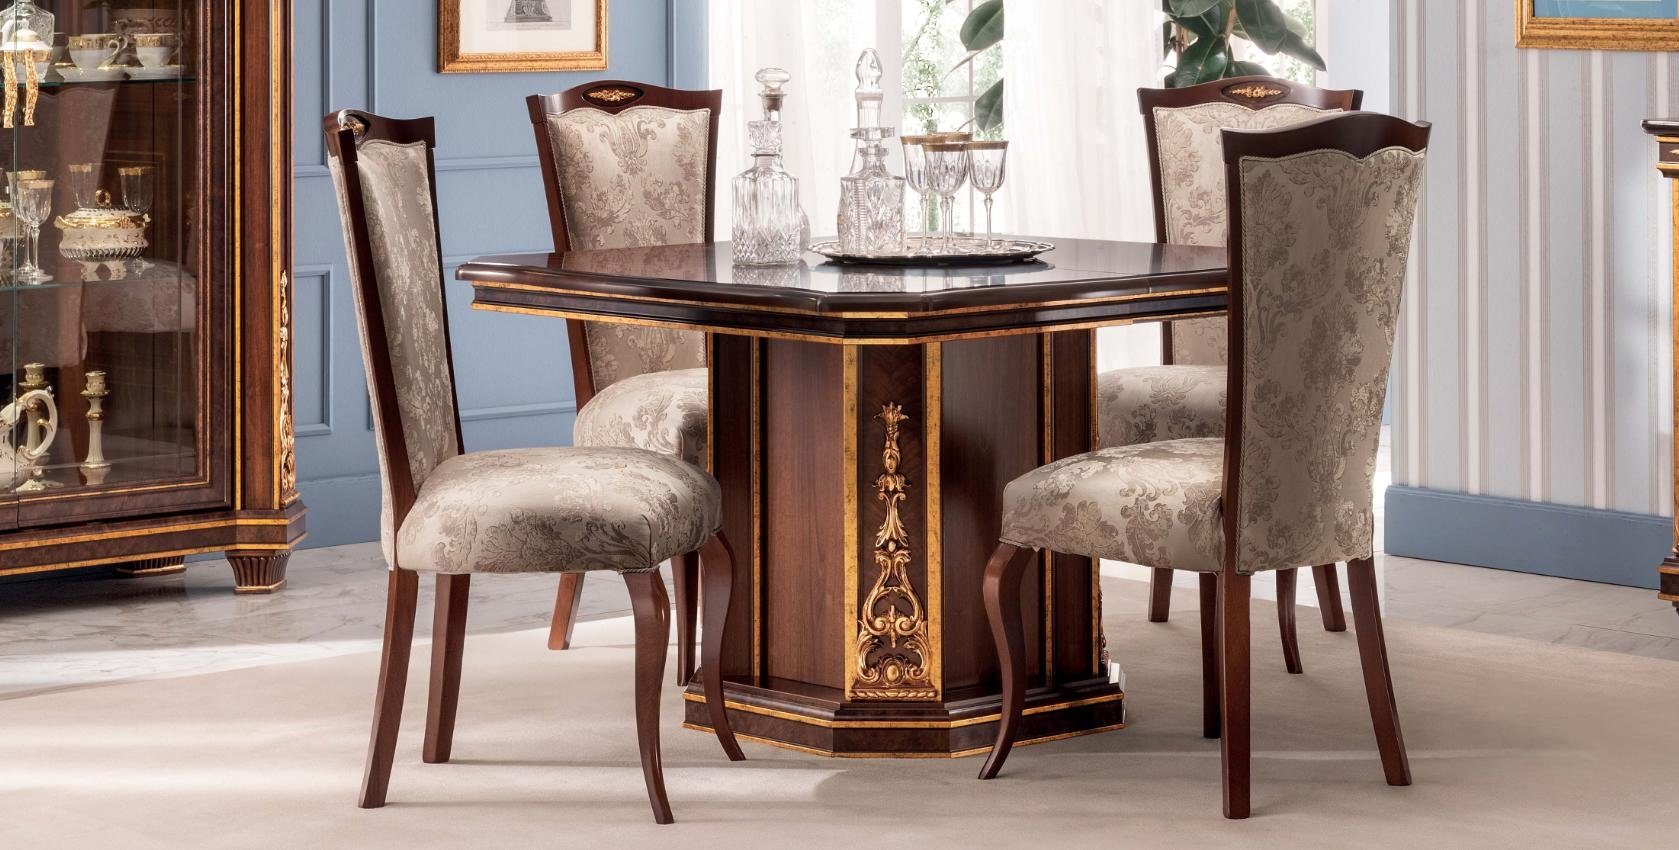 Echtes Italy Stuhl, Designer Antik Stühle Stil Klassischer Stuhl Rokoko JVmoebel arredoclassic™ Holz Barock